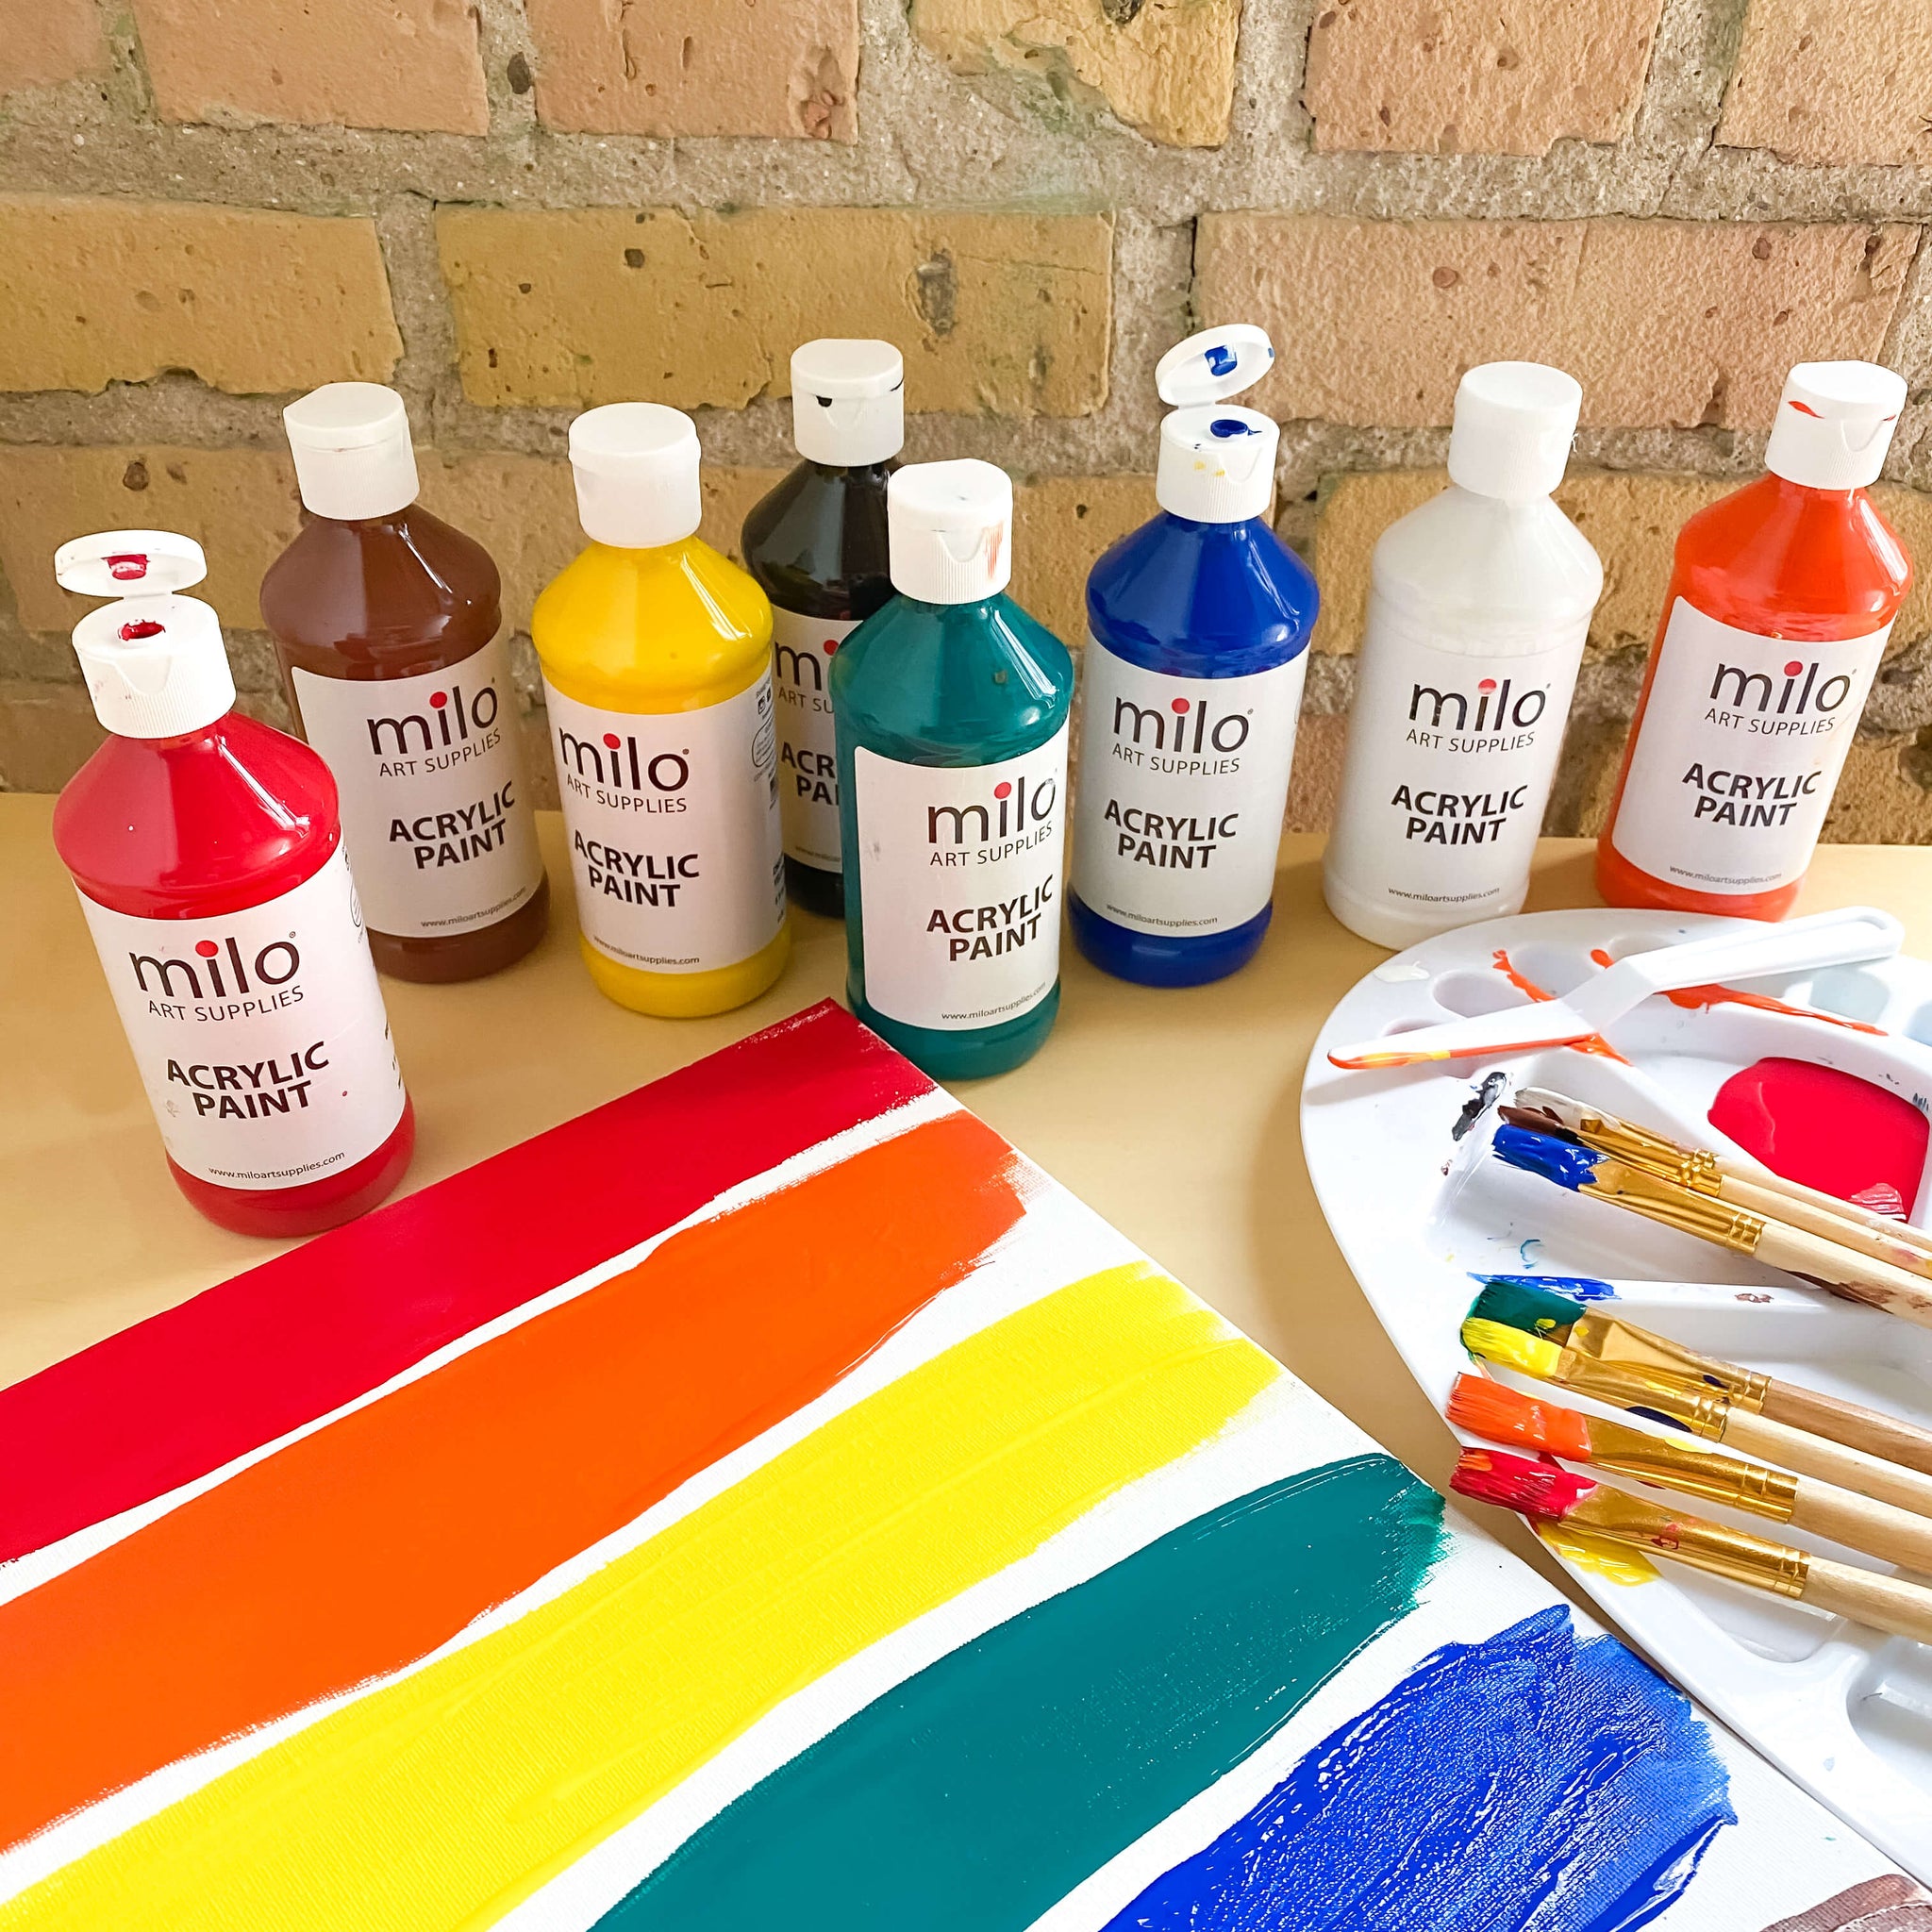 Milo Acrylic Paint 4 oz Bottles Set of 6 – Milo Art Supplies